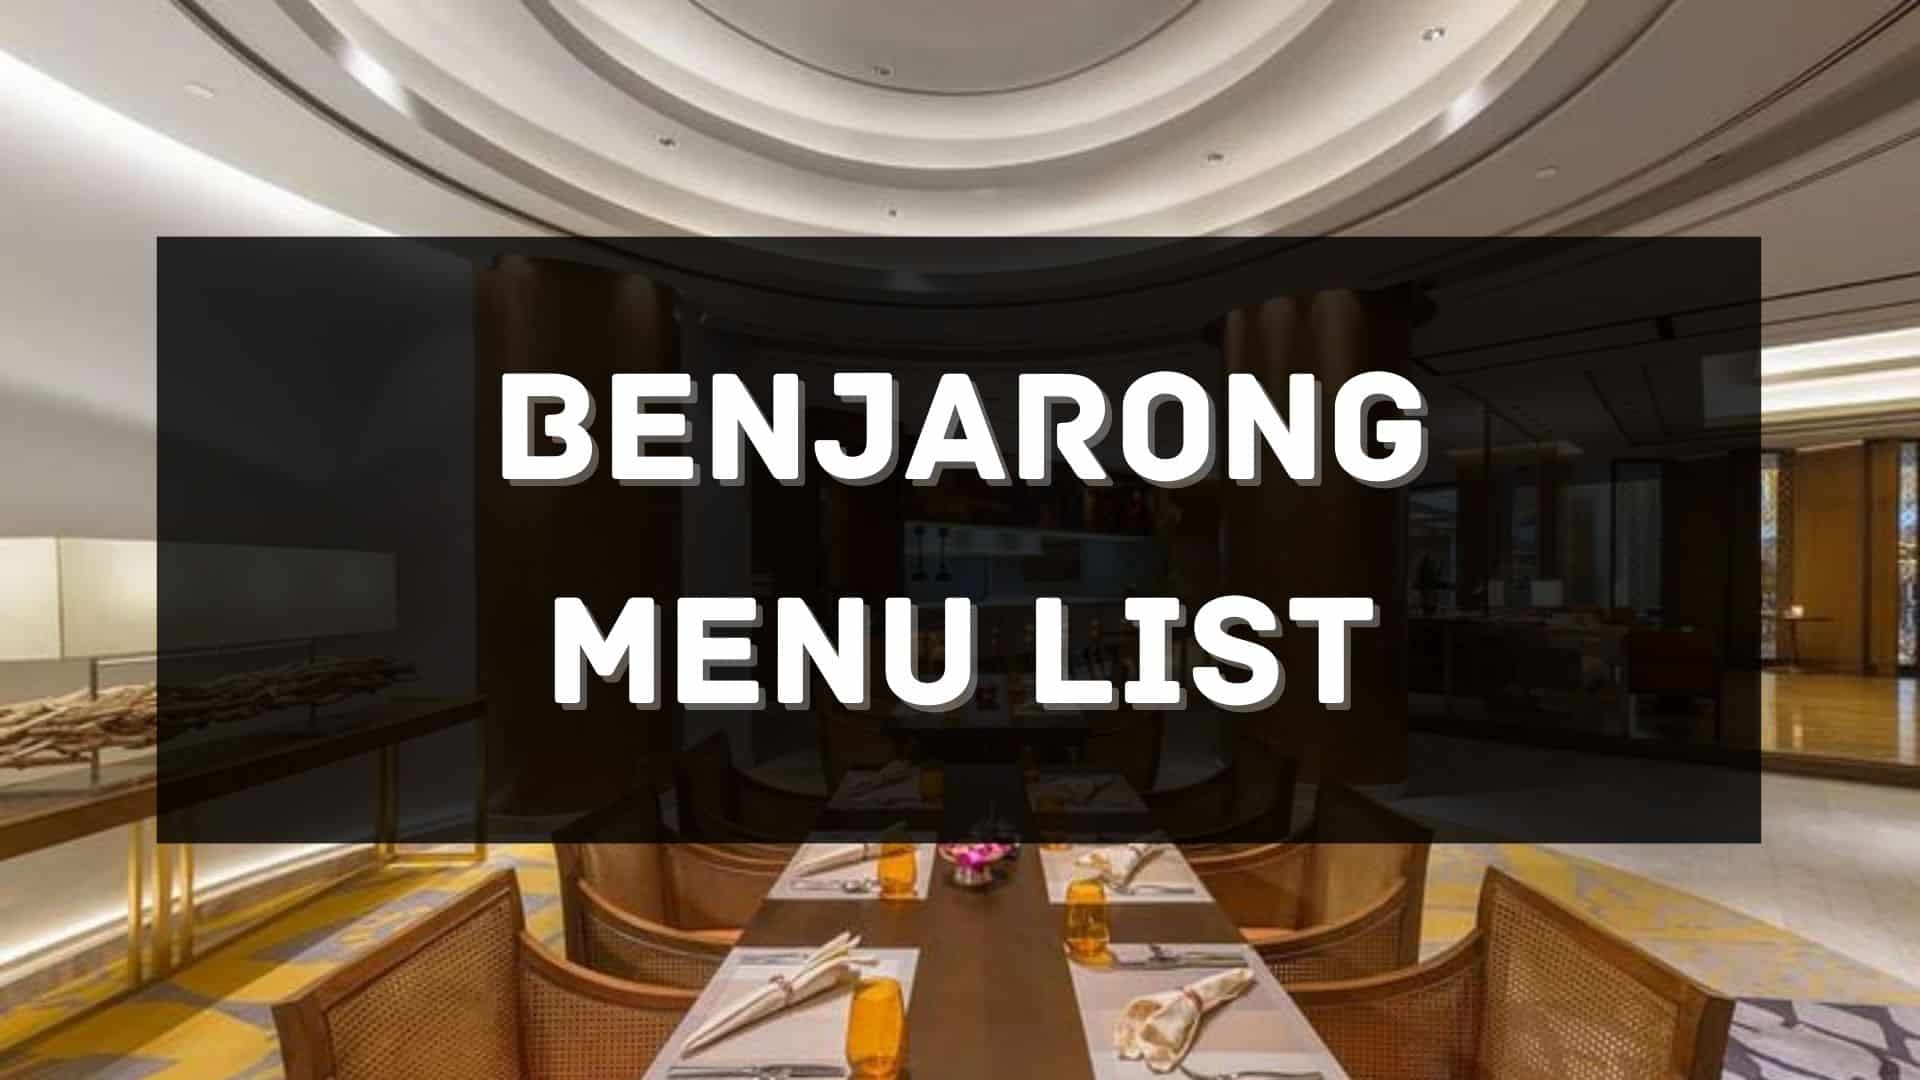 benjarong restaurant menu prices philippines